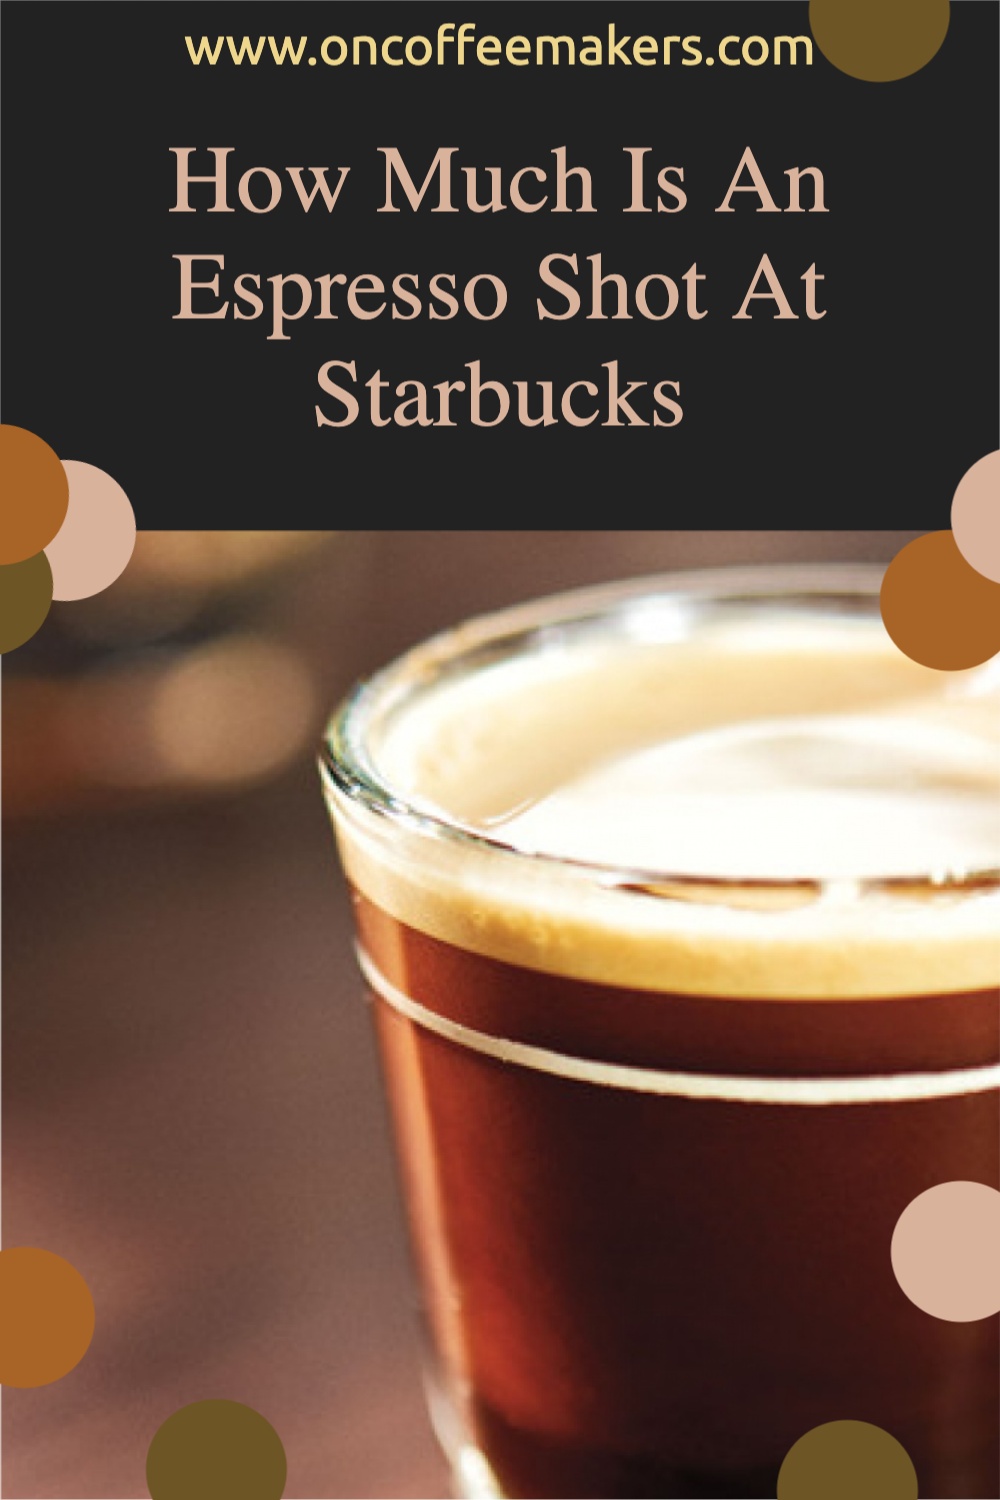 How-Much-Is-An-Espresso-Shot-At-Starbucks.jpg